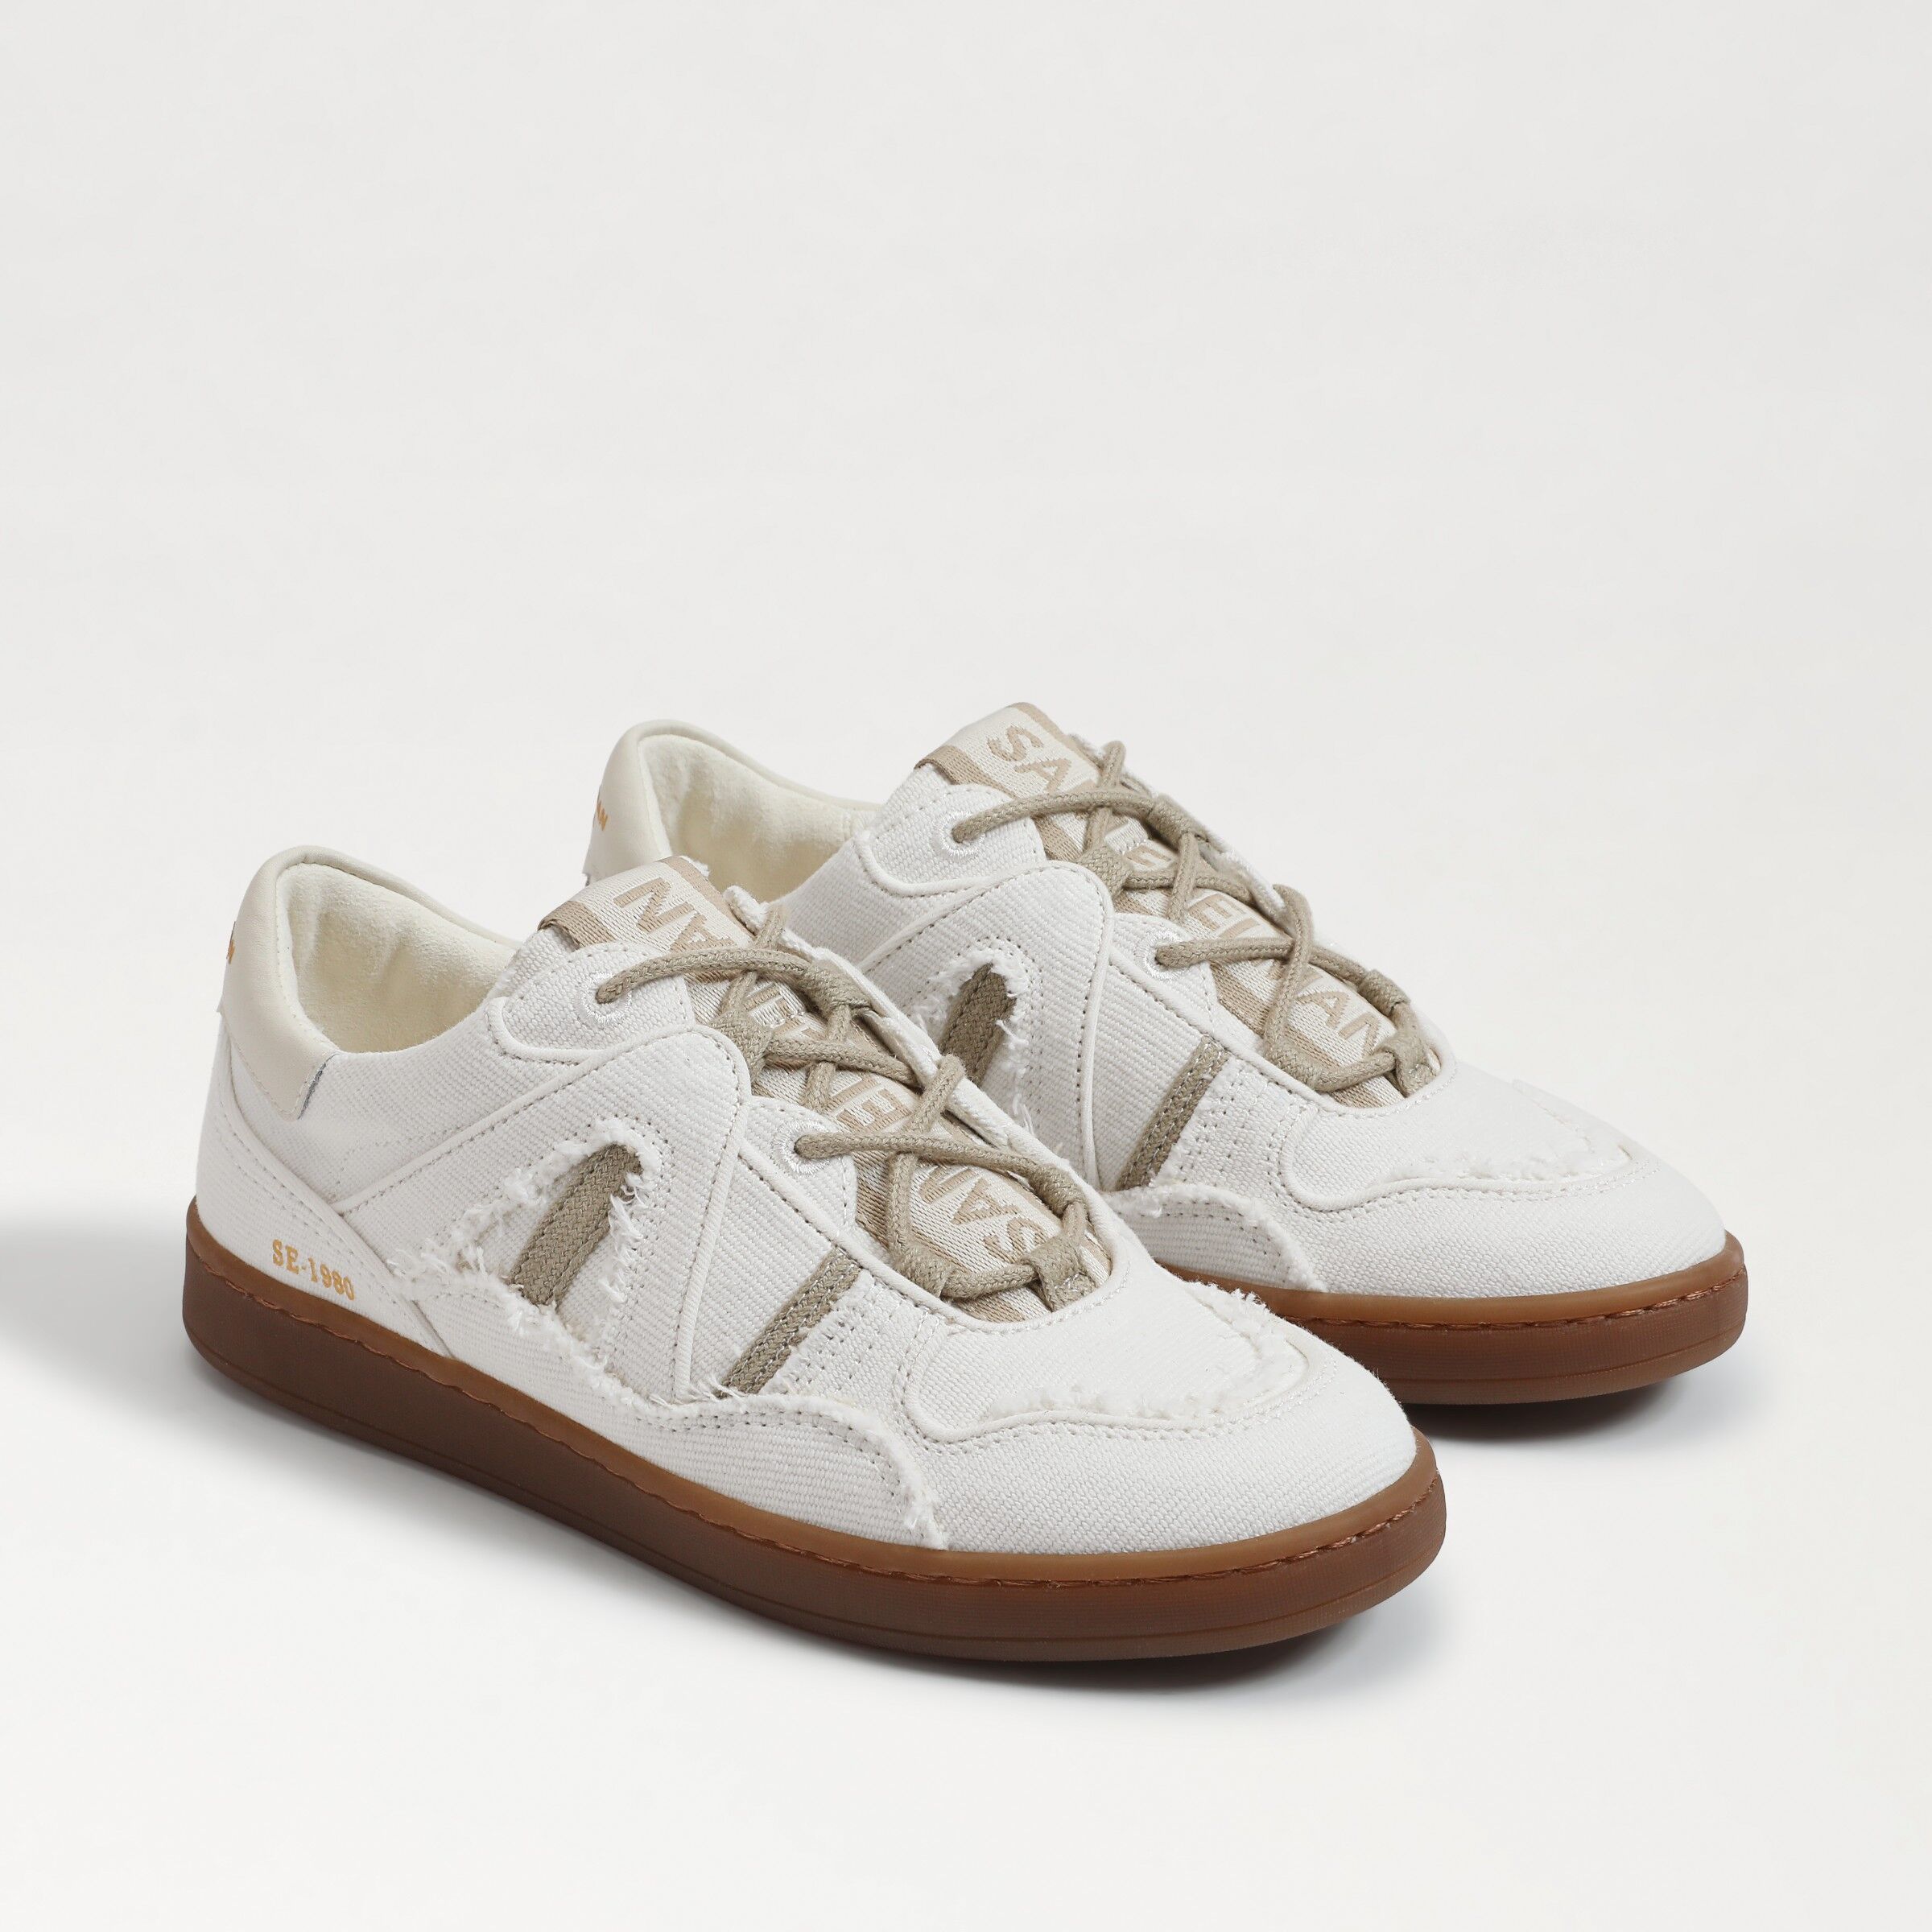 Sam Edelman Jayne Lace Up Sneaker White/Stone Grey Fabric 7.0